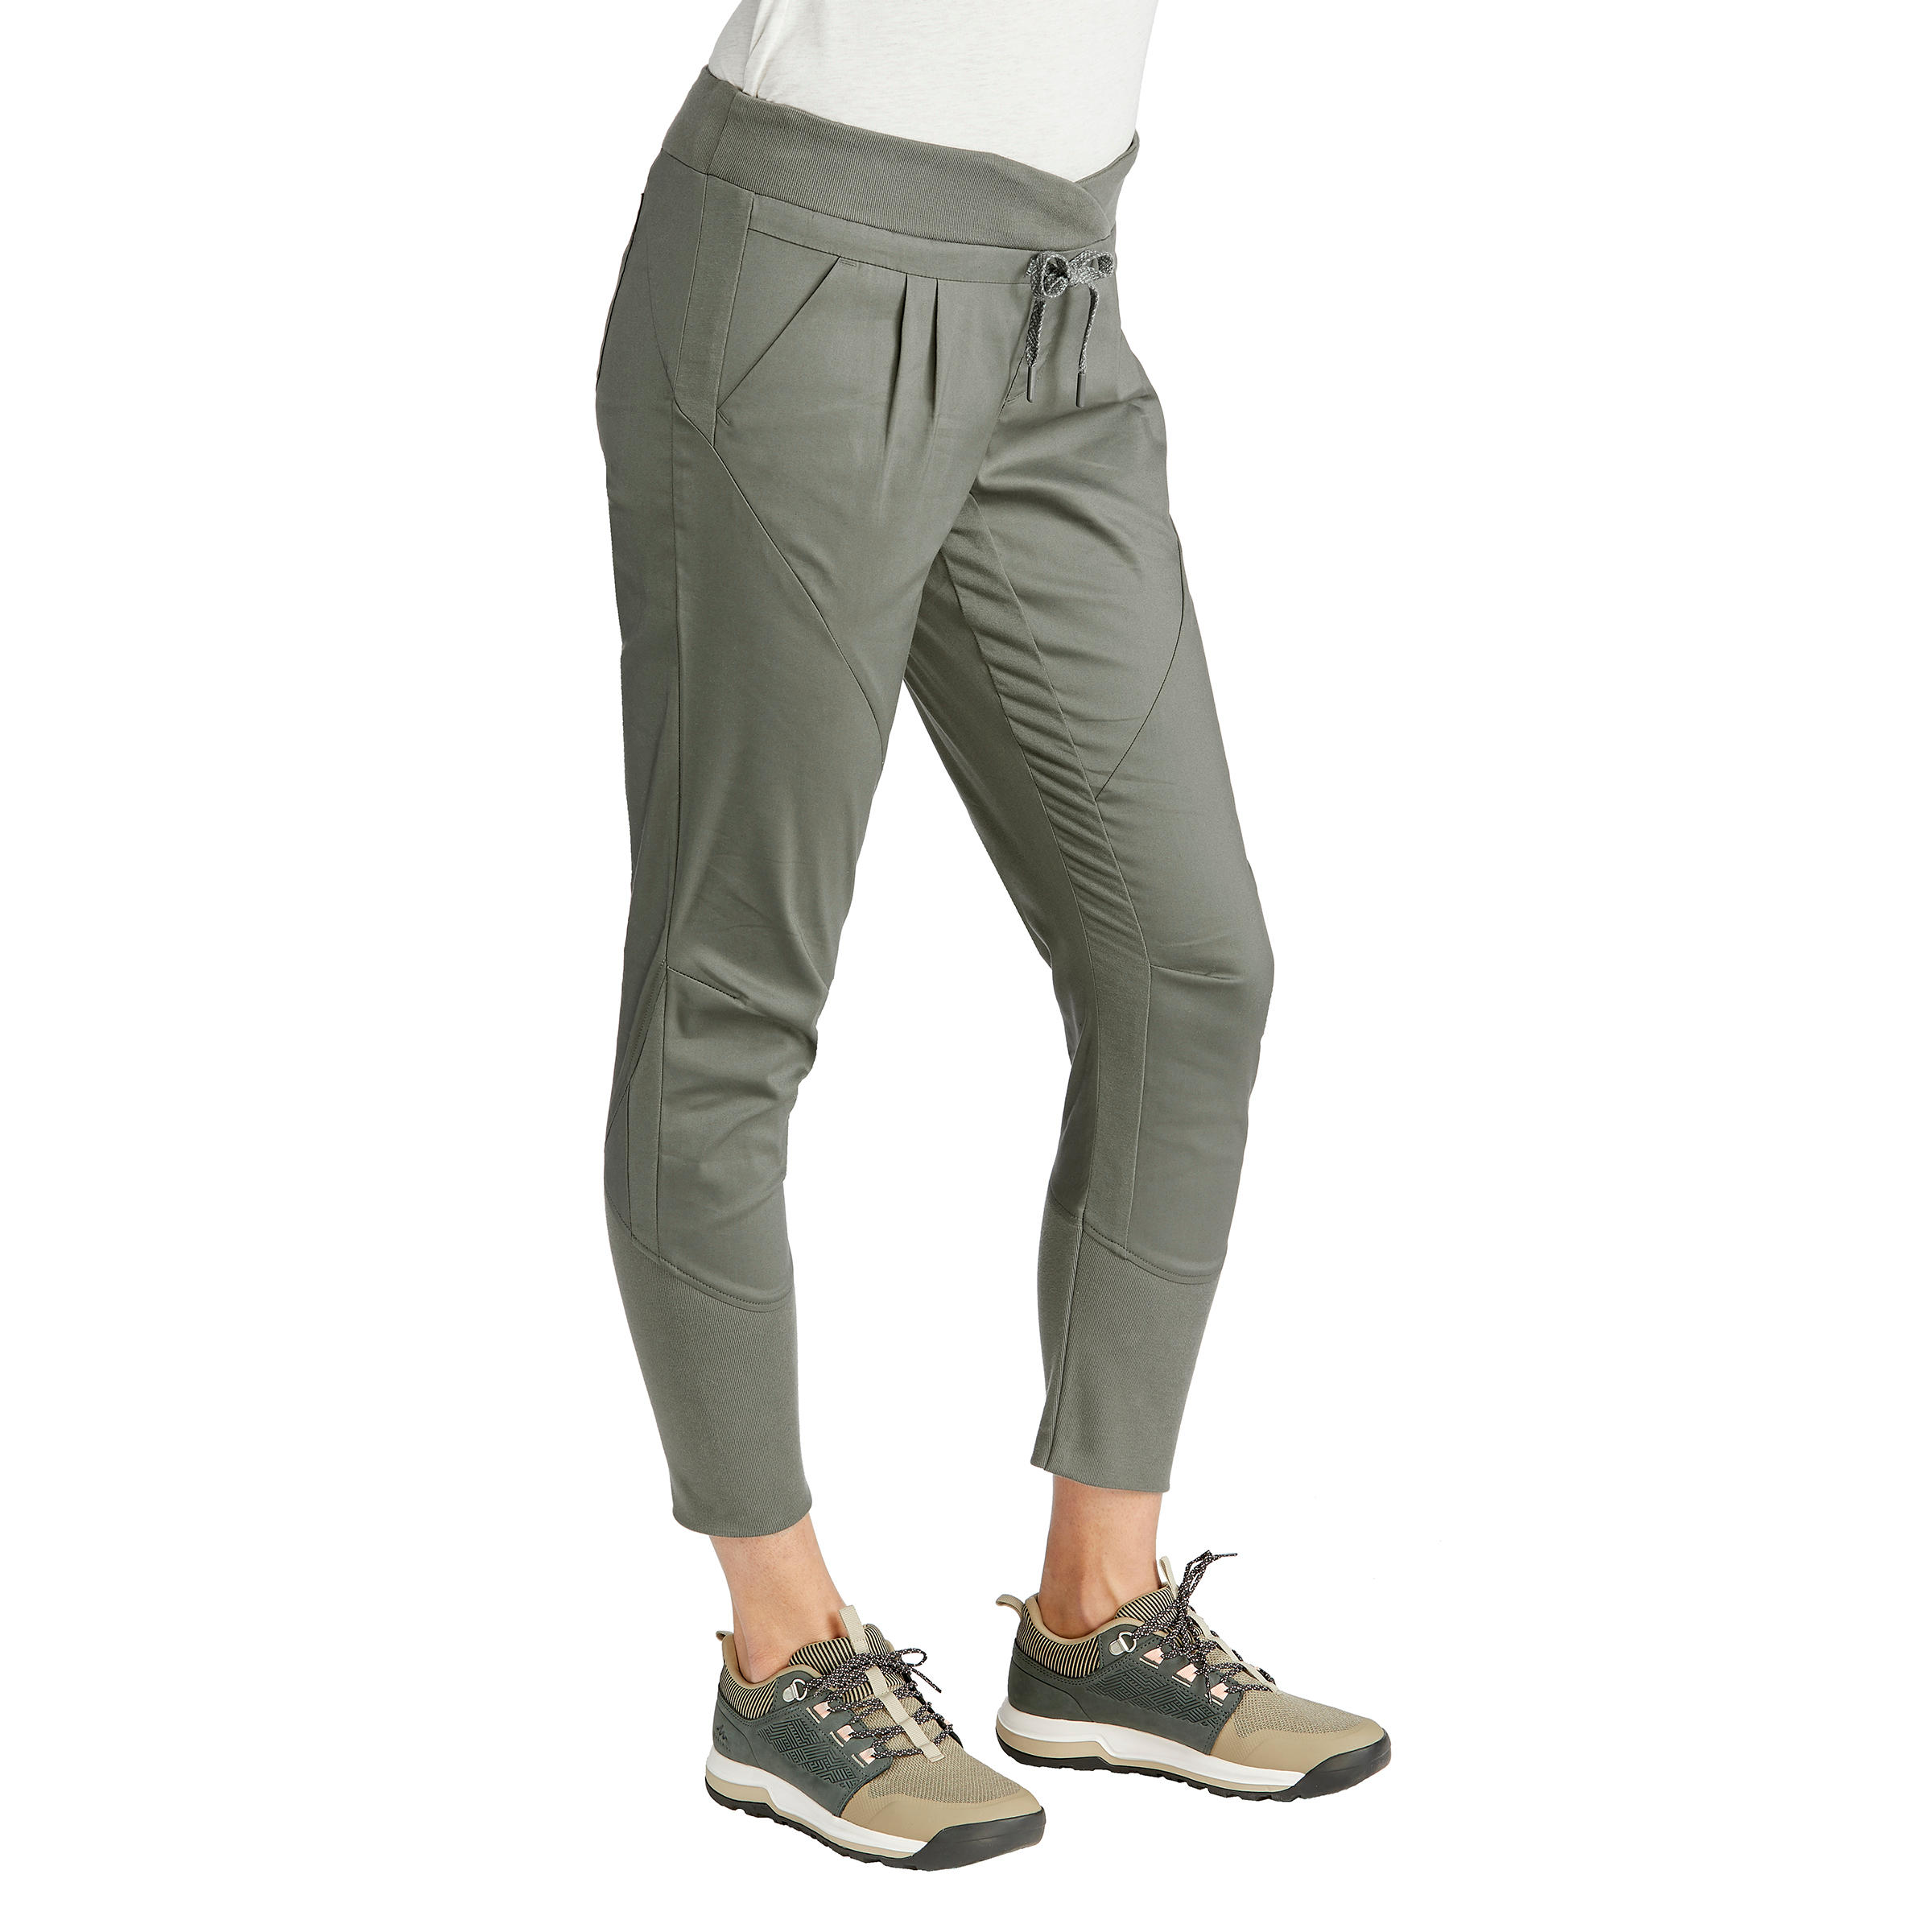 donhobo Womens Hiking Trousers Quick Dry Stretch Lightweight Outdoor UPF  40 Fishing Safari Travel Shorts Walking Pants Black XS  Amazoncouk  Fashion